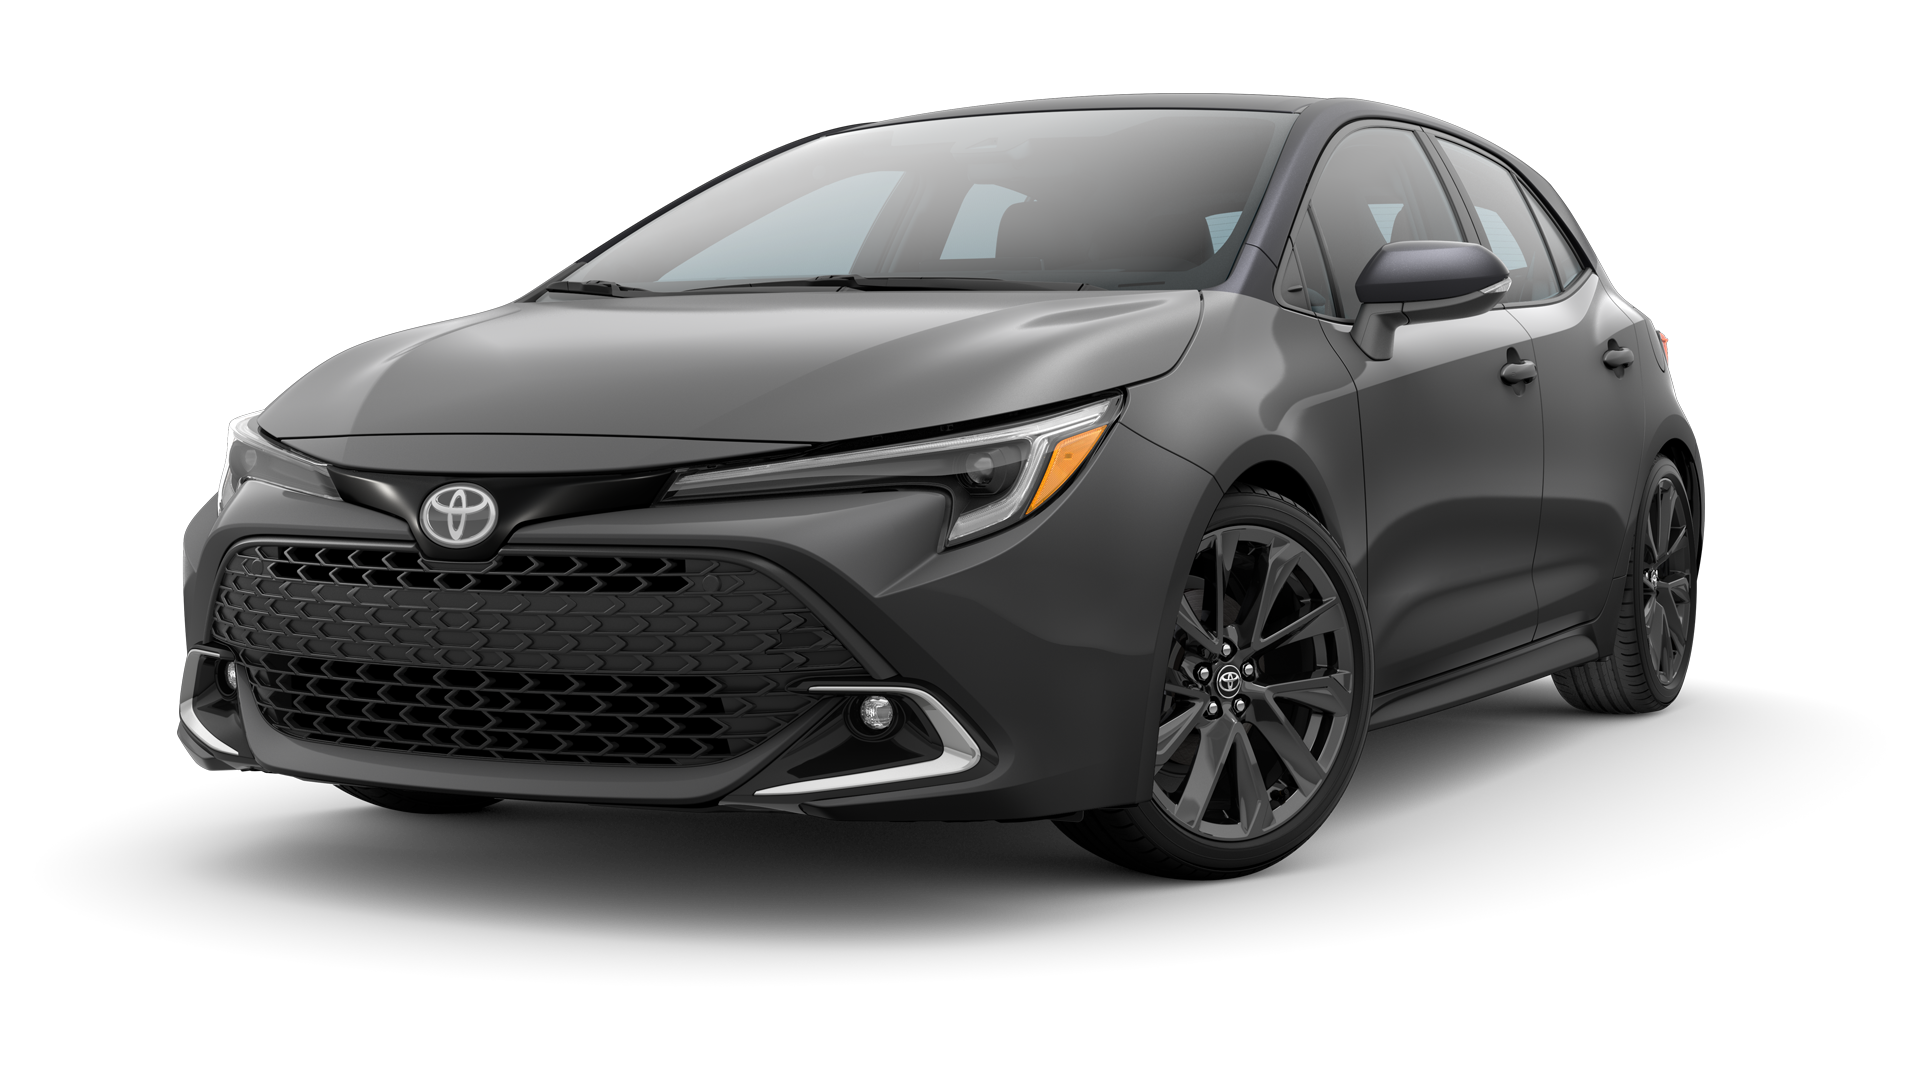 2025 Toyota Hatchback in Magnetic Gray Metallic/Midnight Black Metallic Roof.